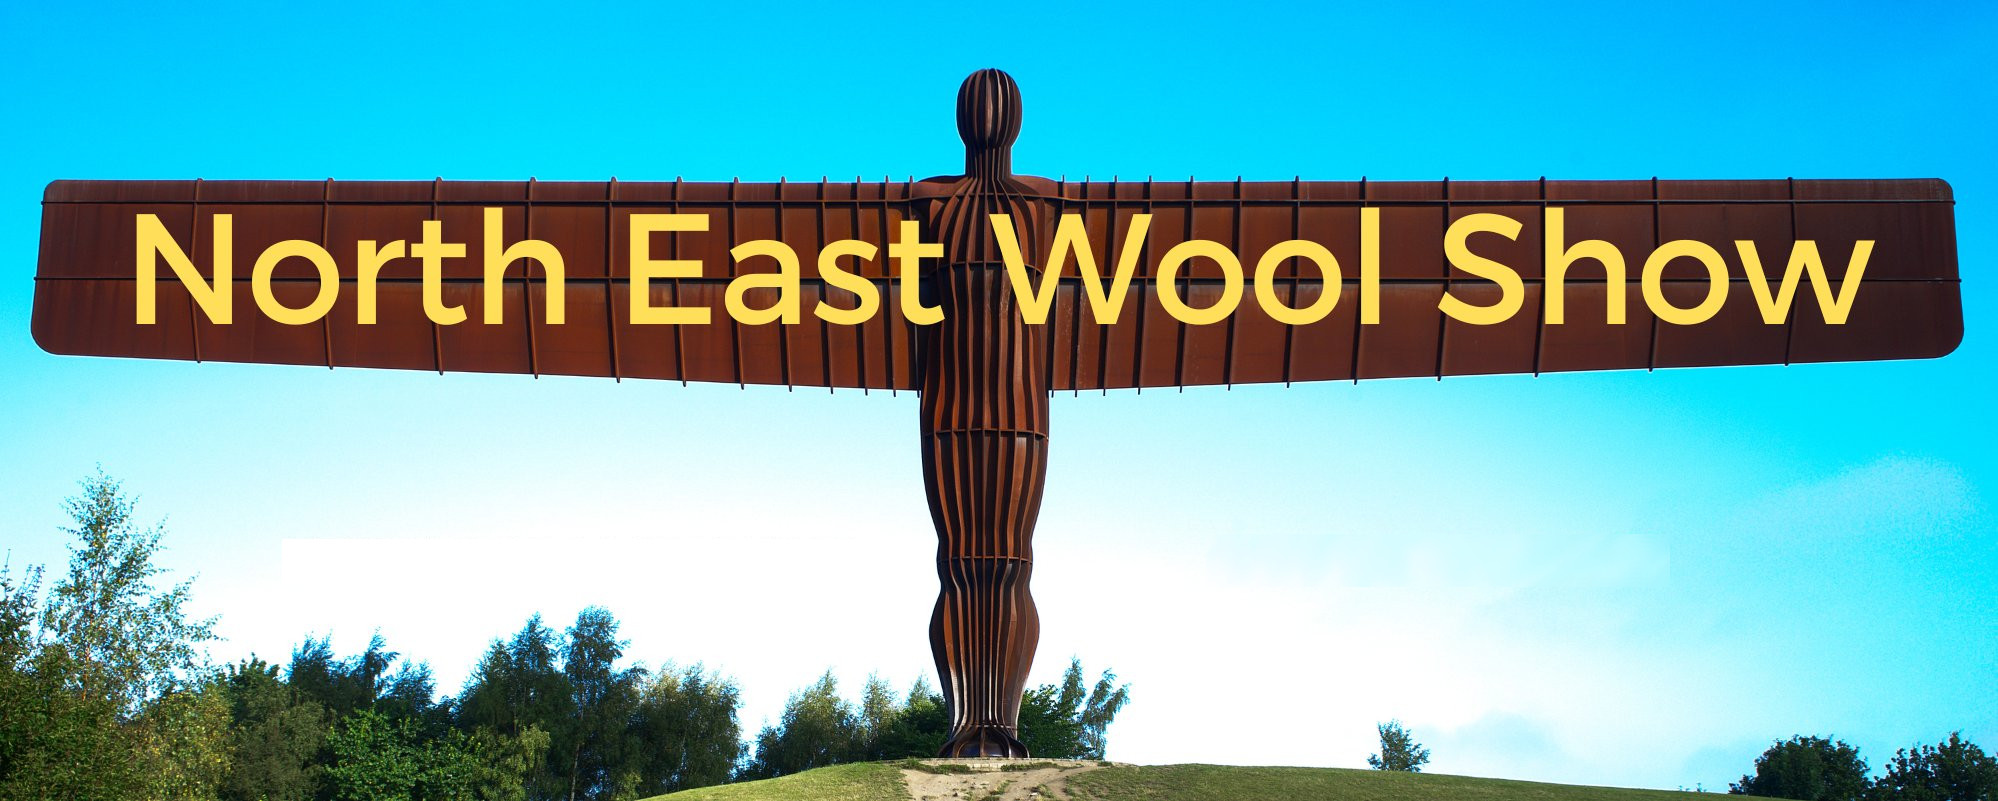 North East Wool Show logo